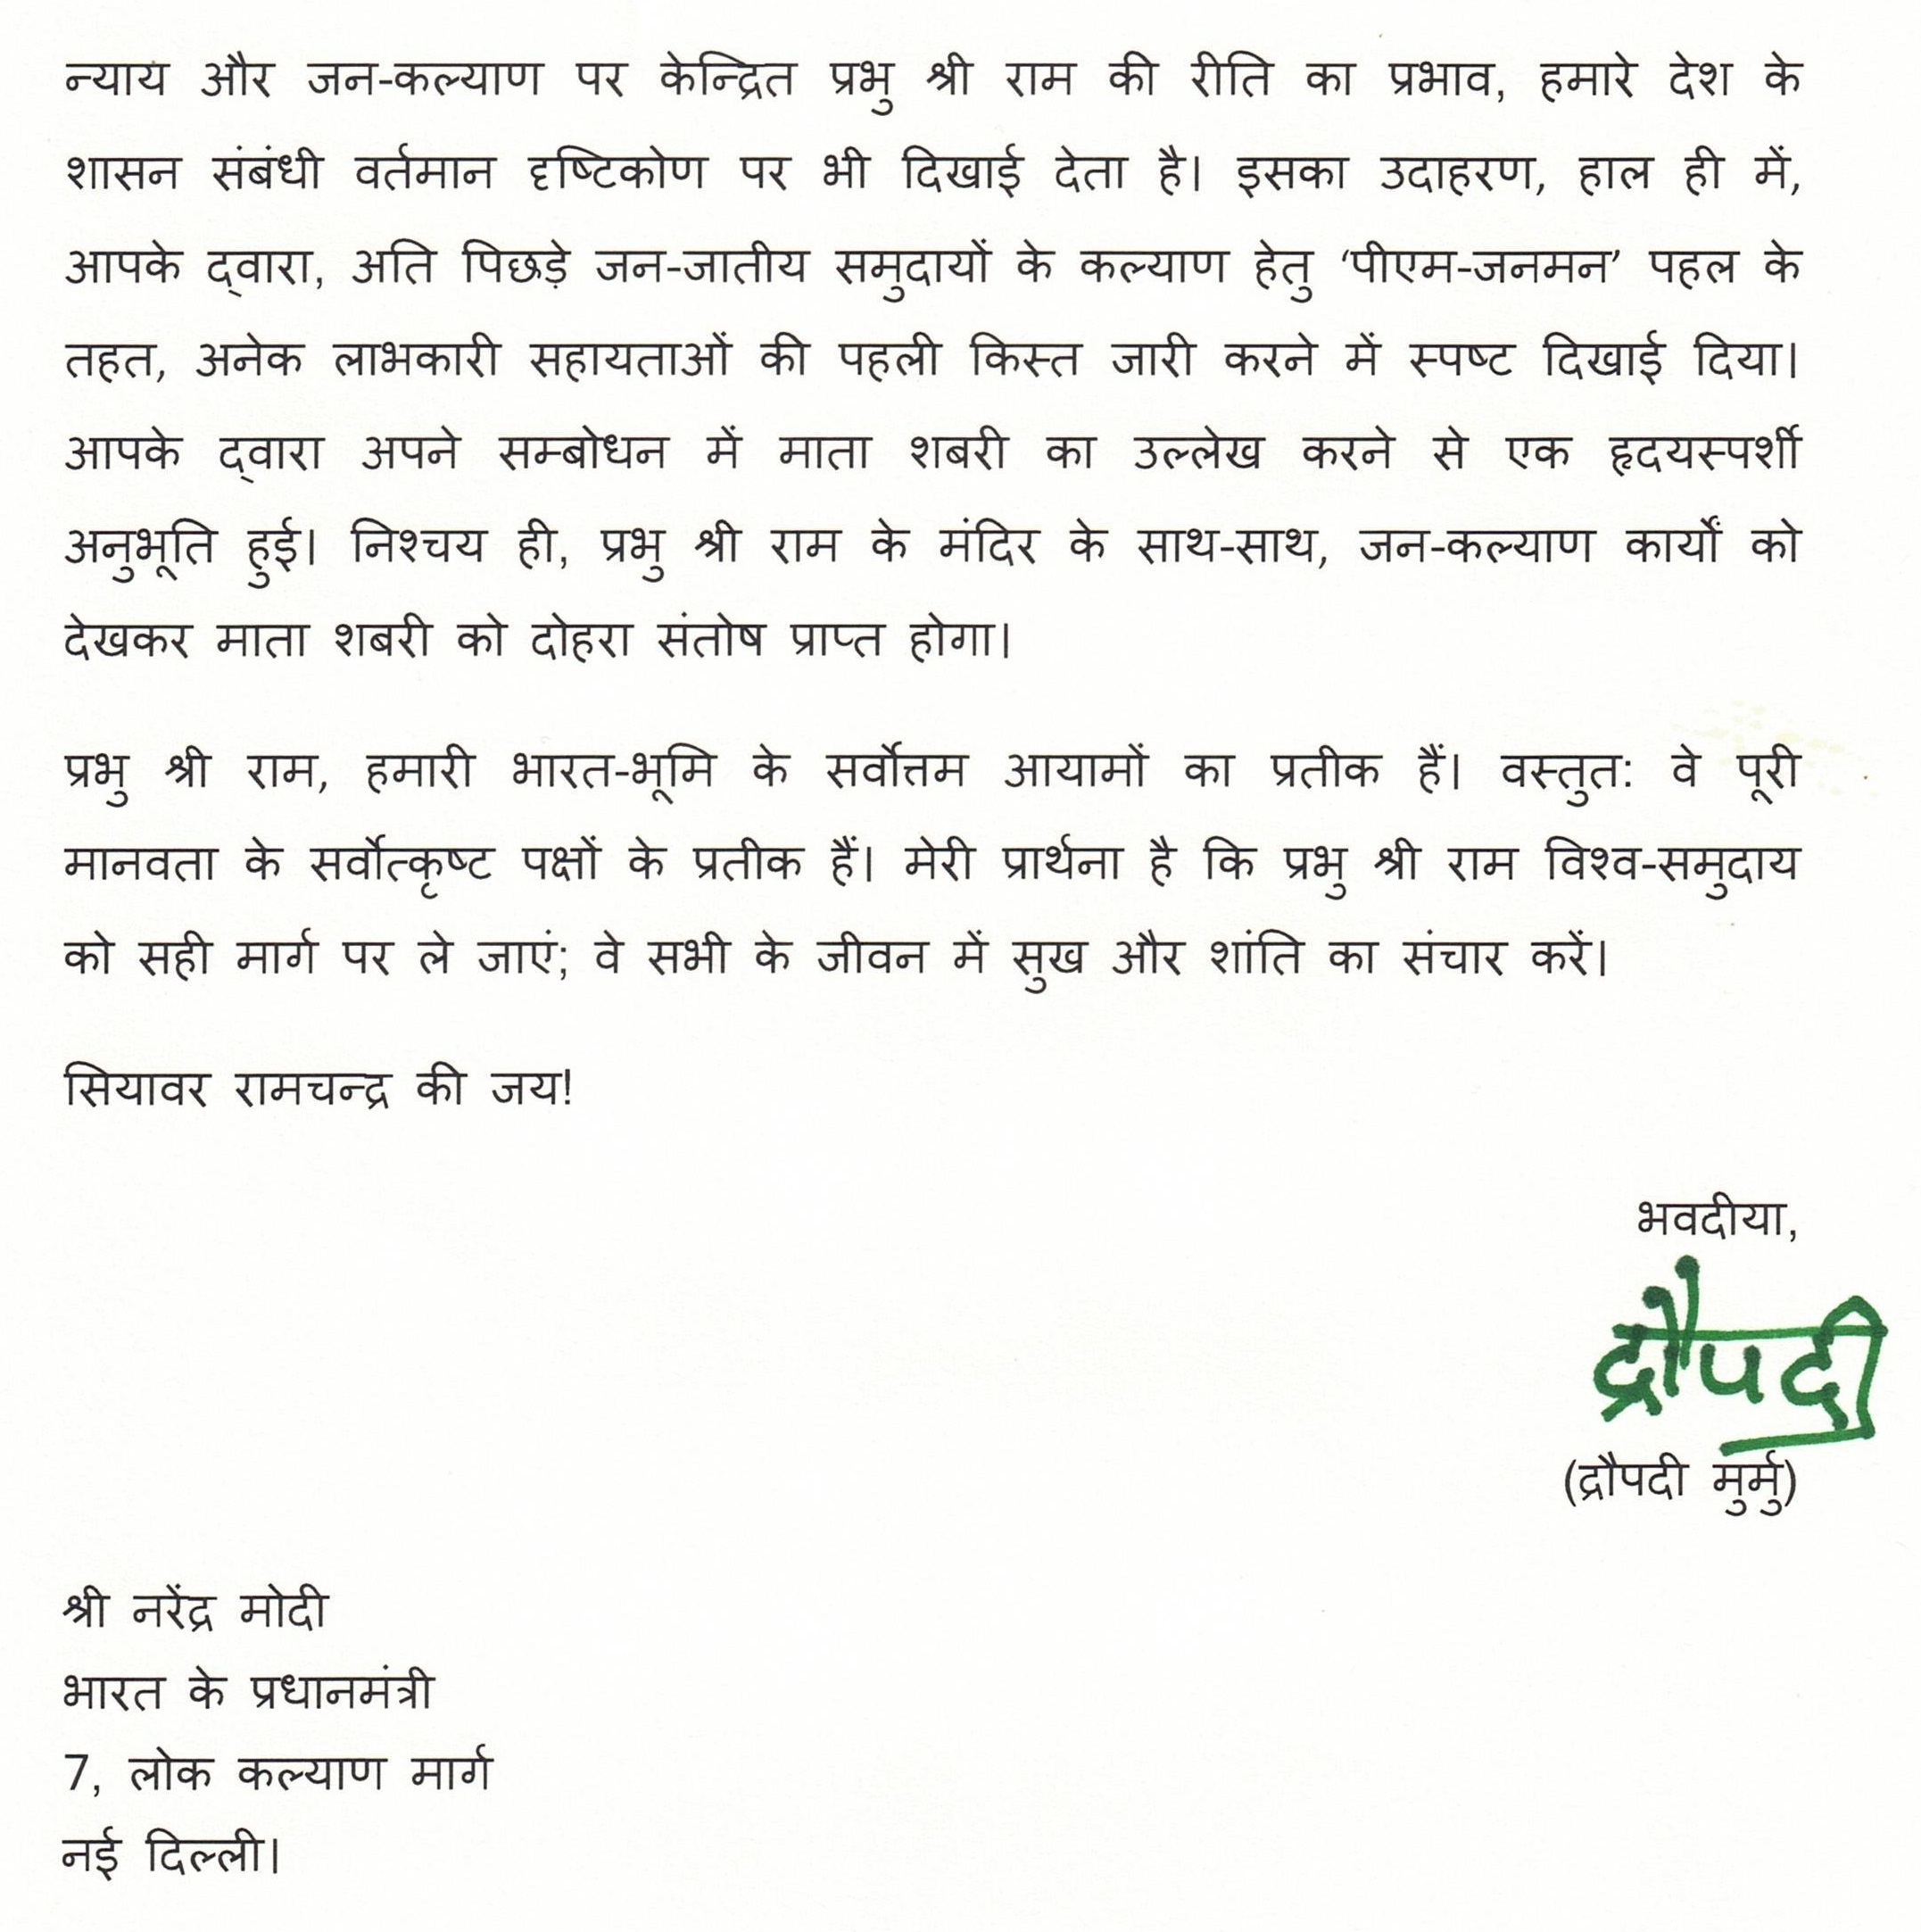 President letter to PM Modi 